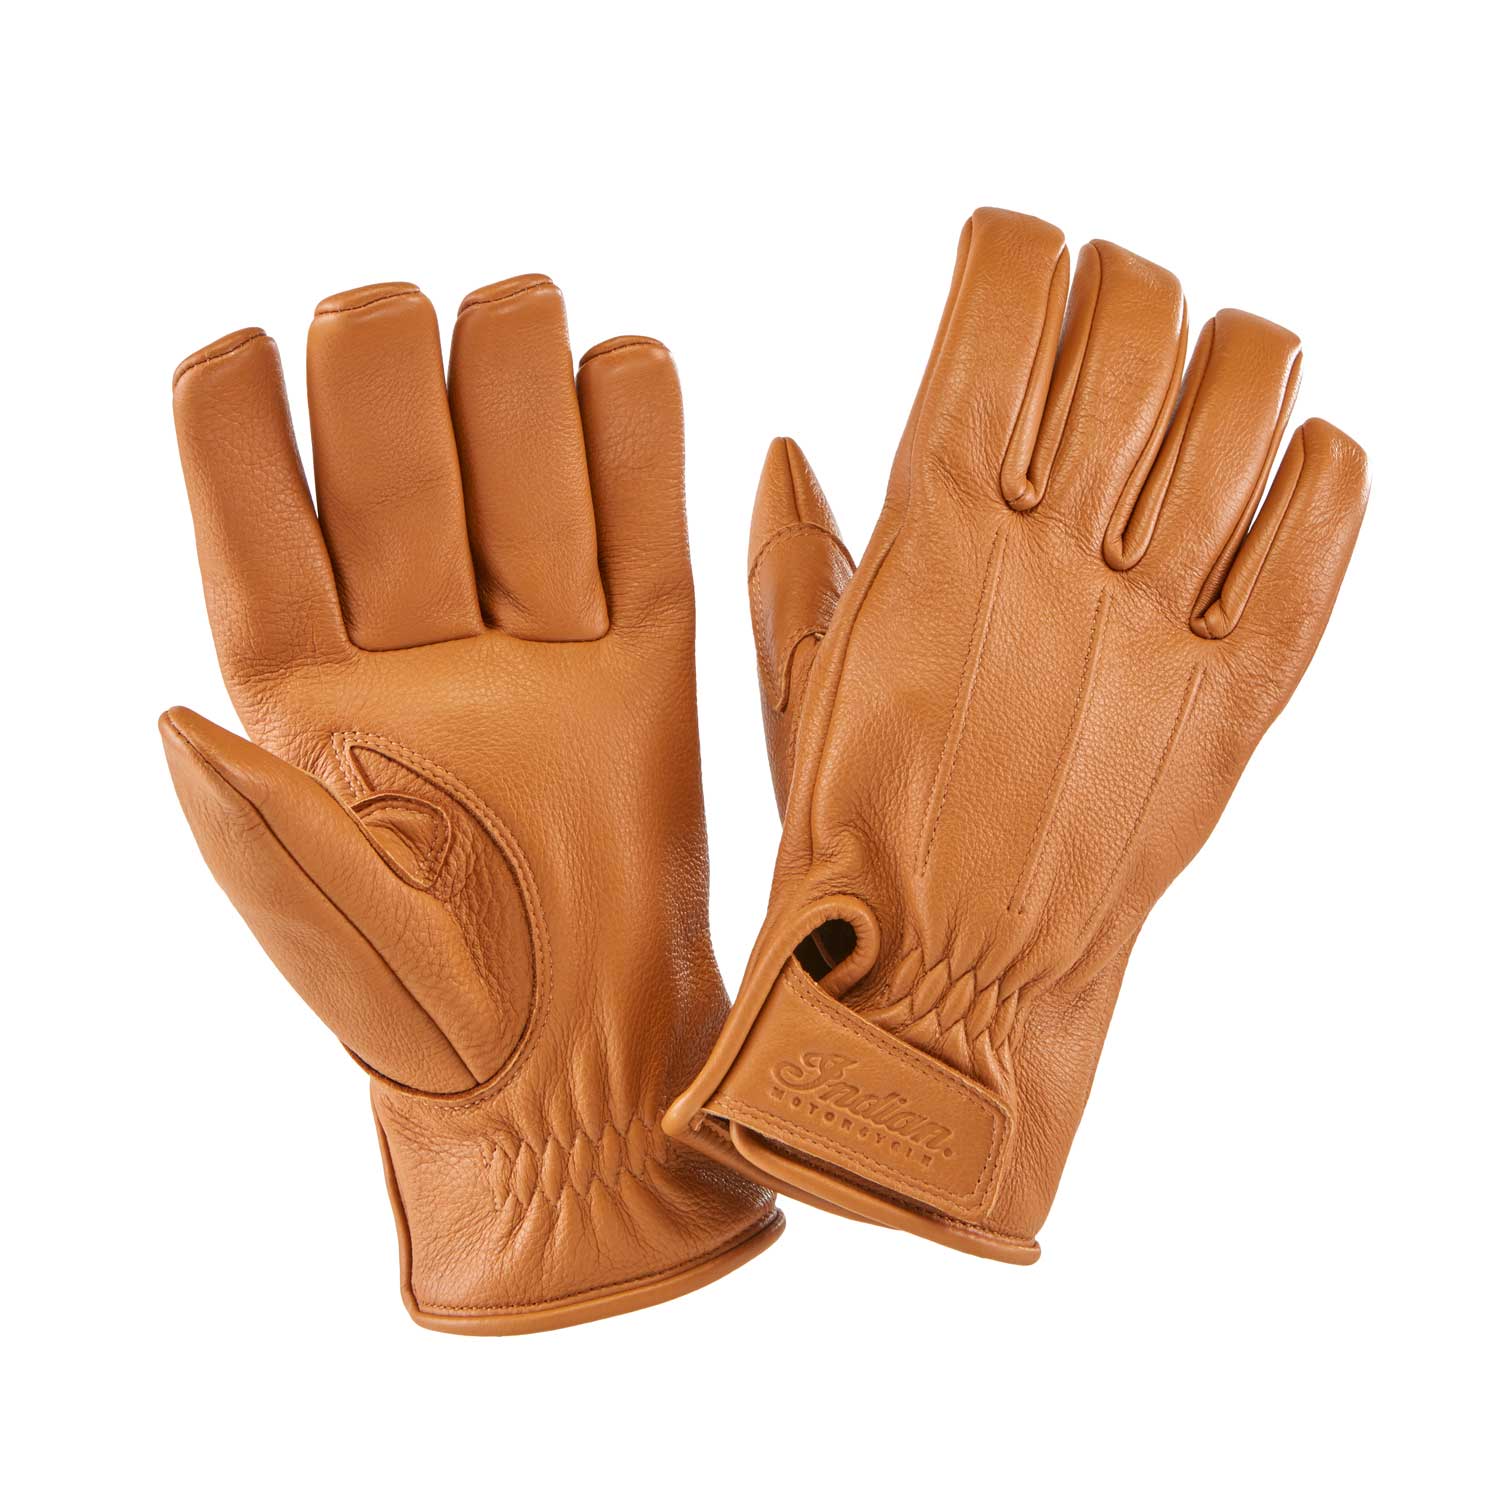 Men's Deerskin Strap Glove, Tan